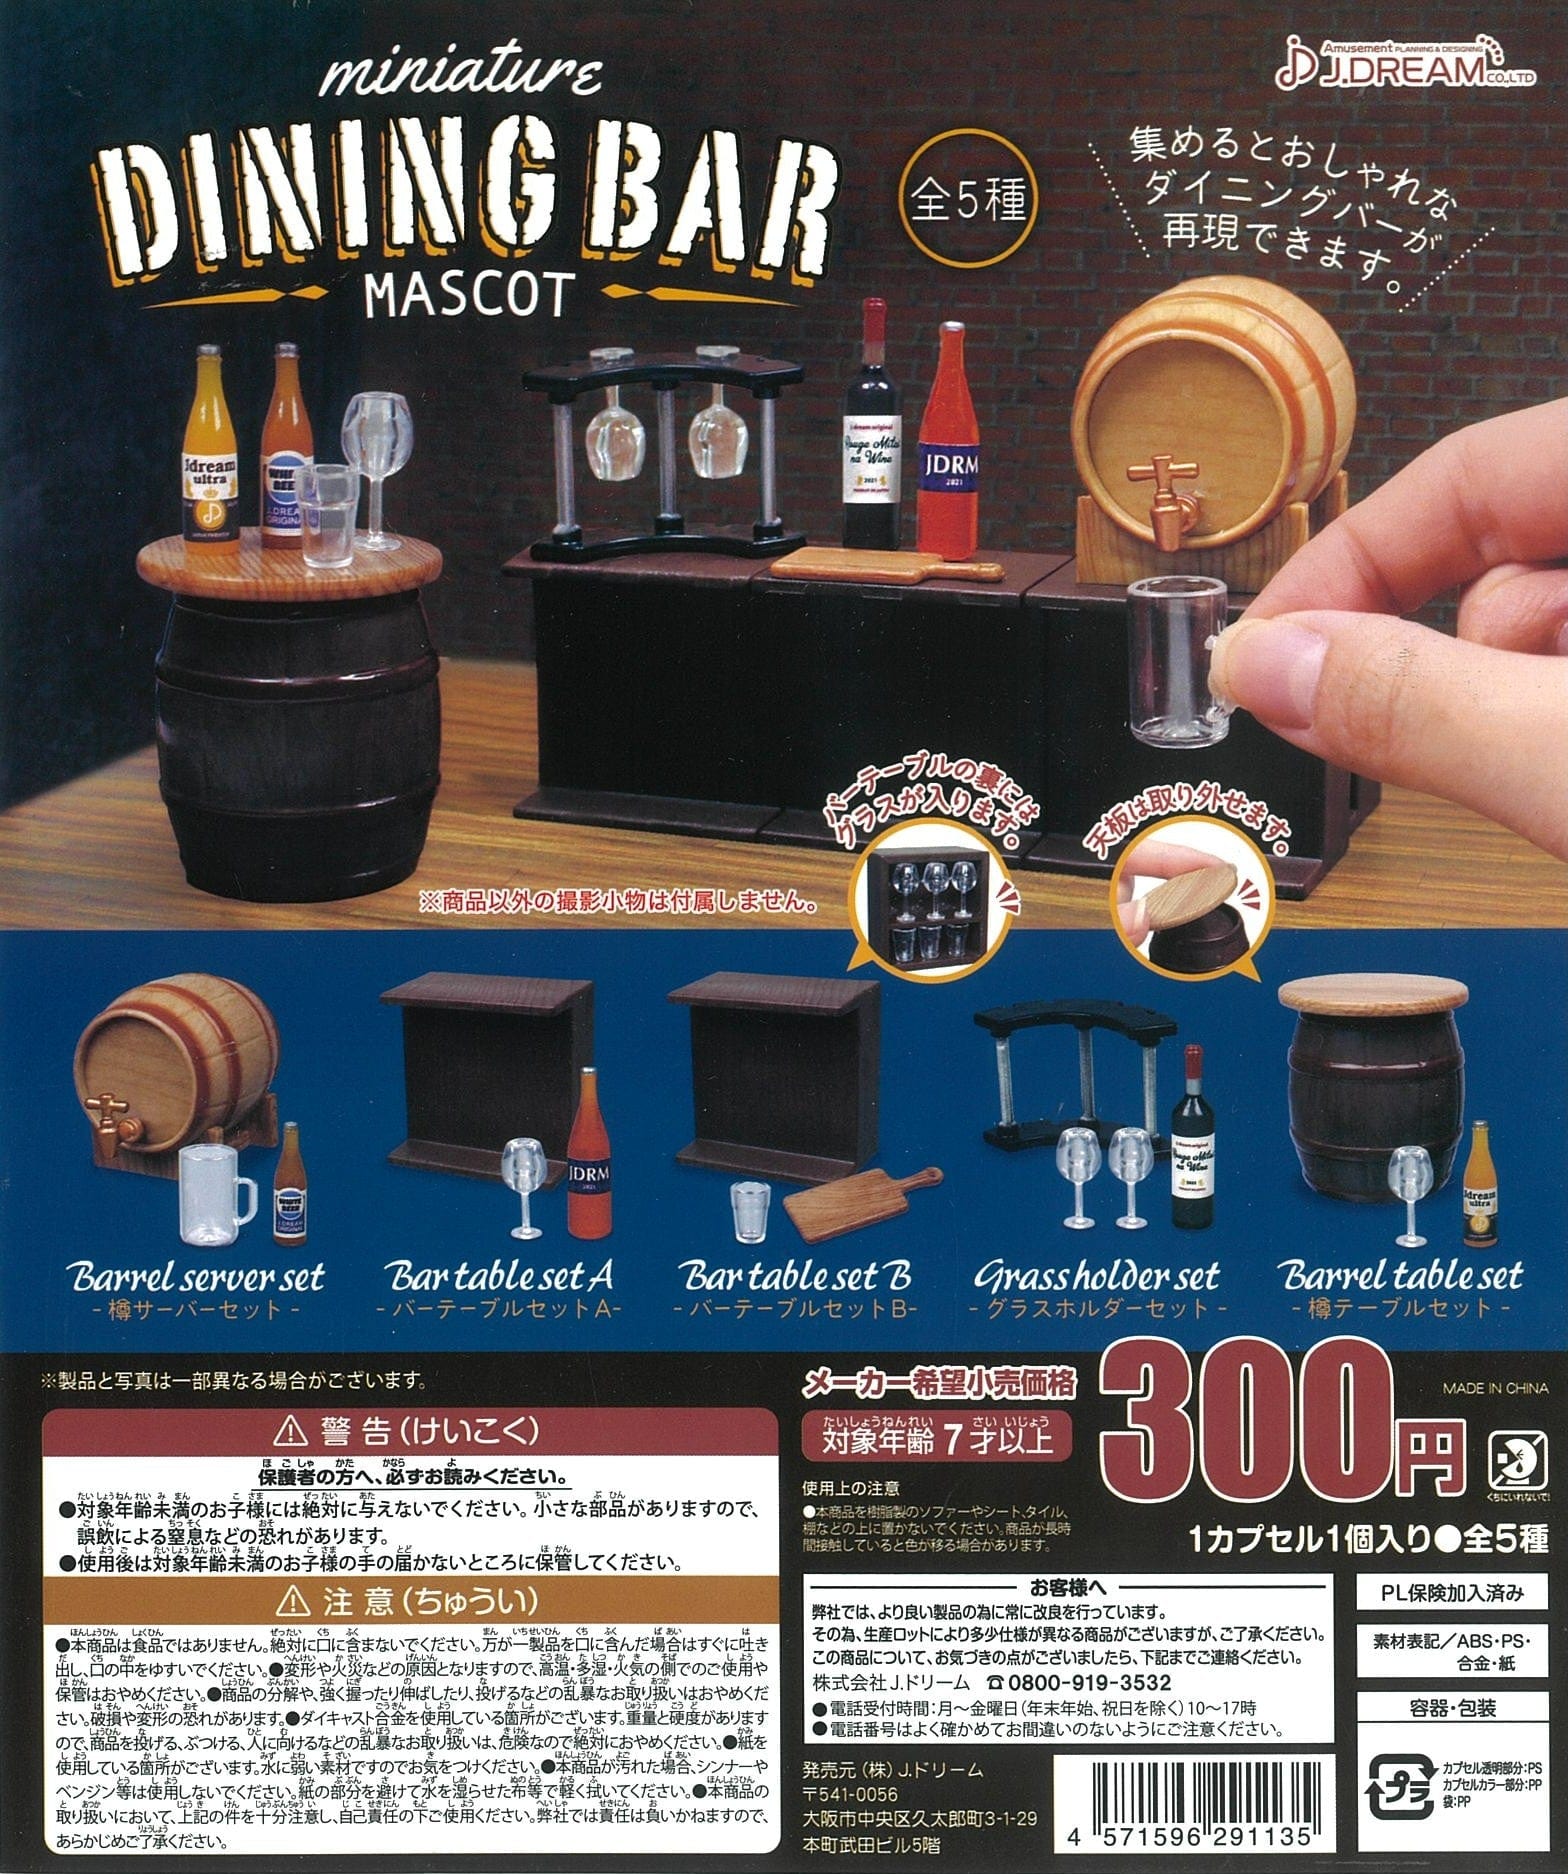 J.Dream CP1905 Miniature Dining Bar Mascot